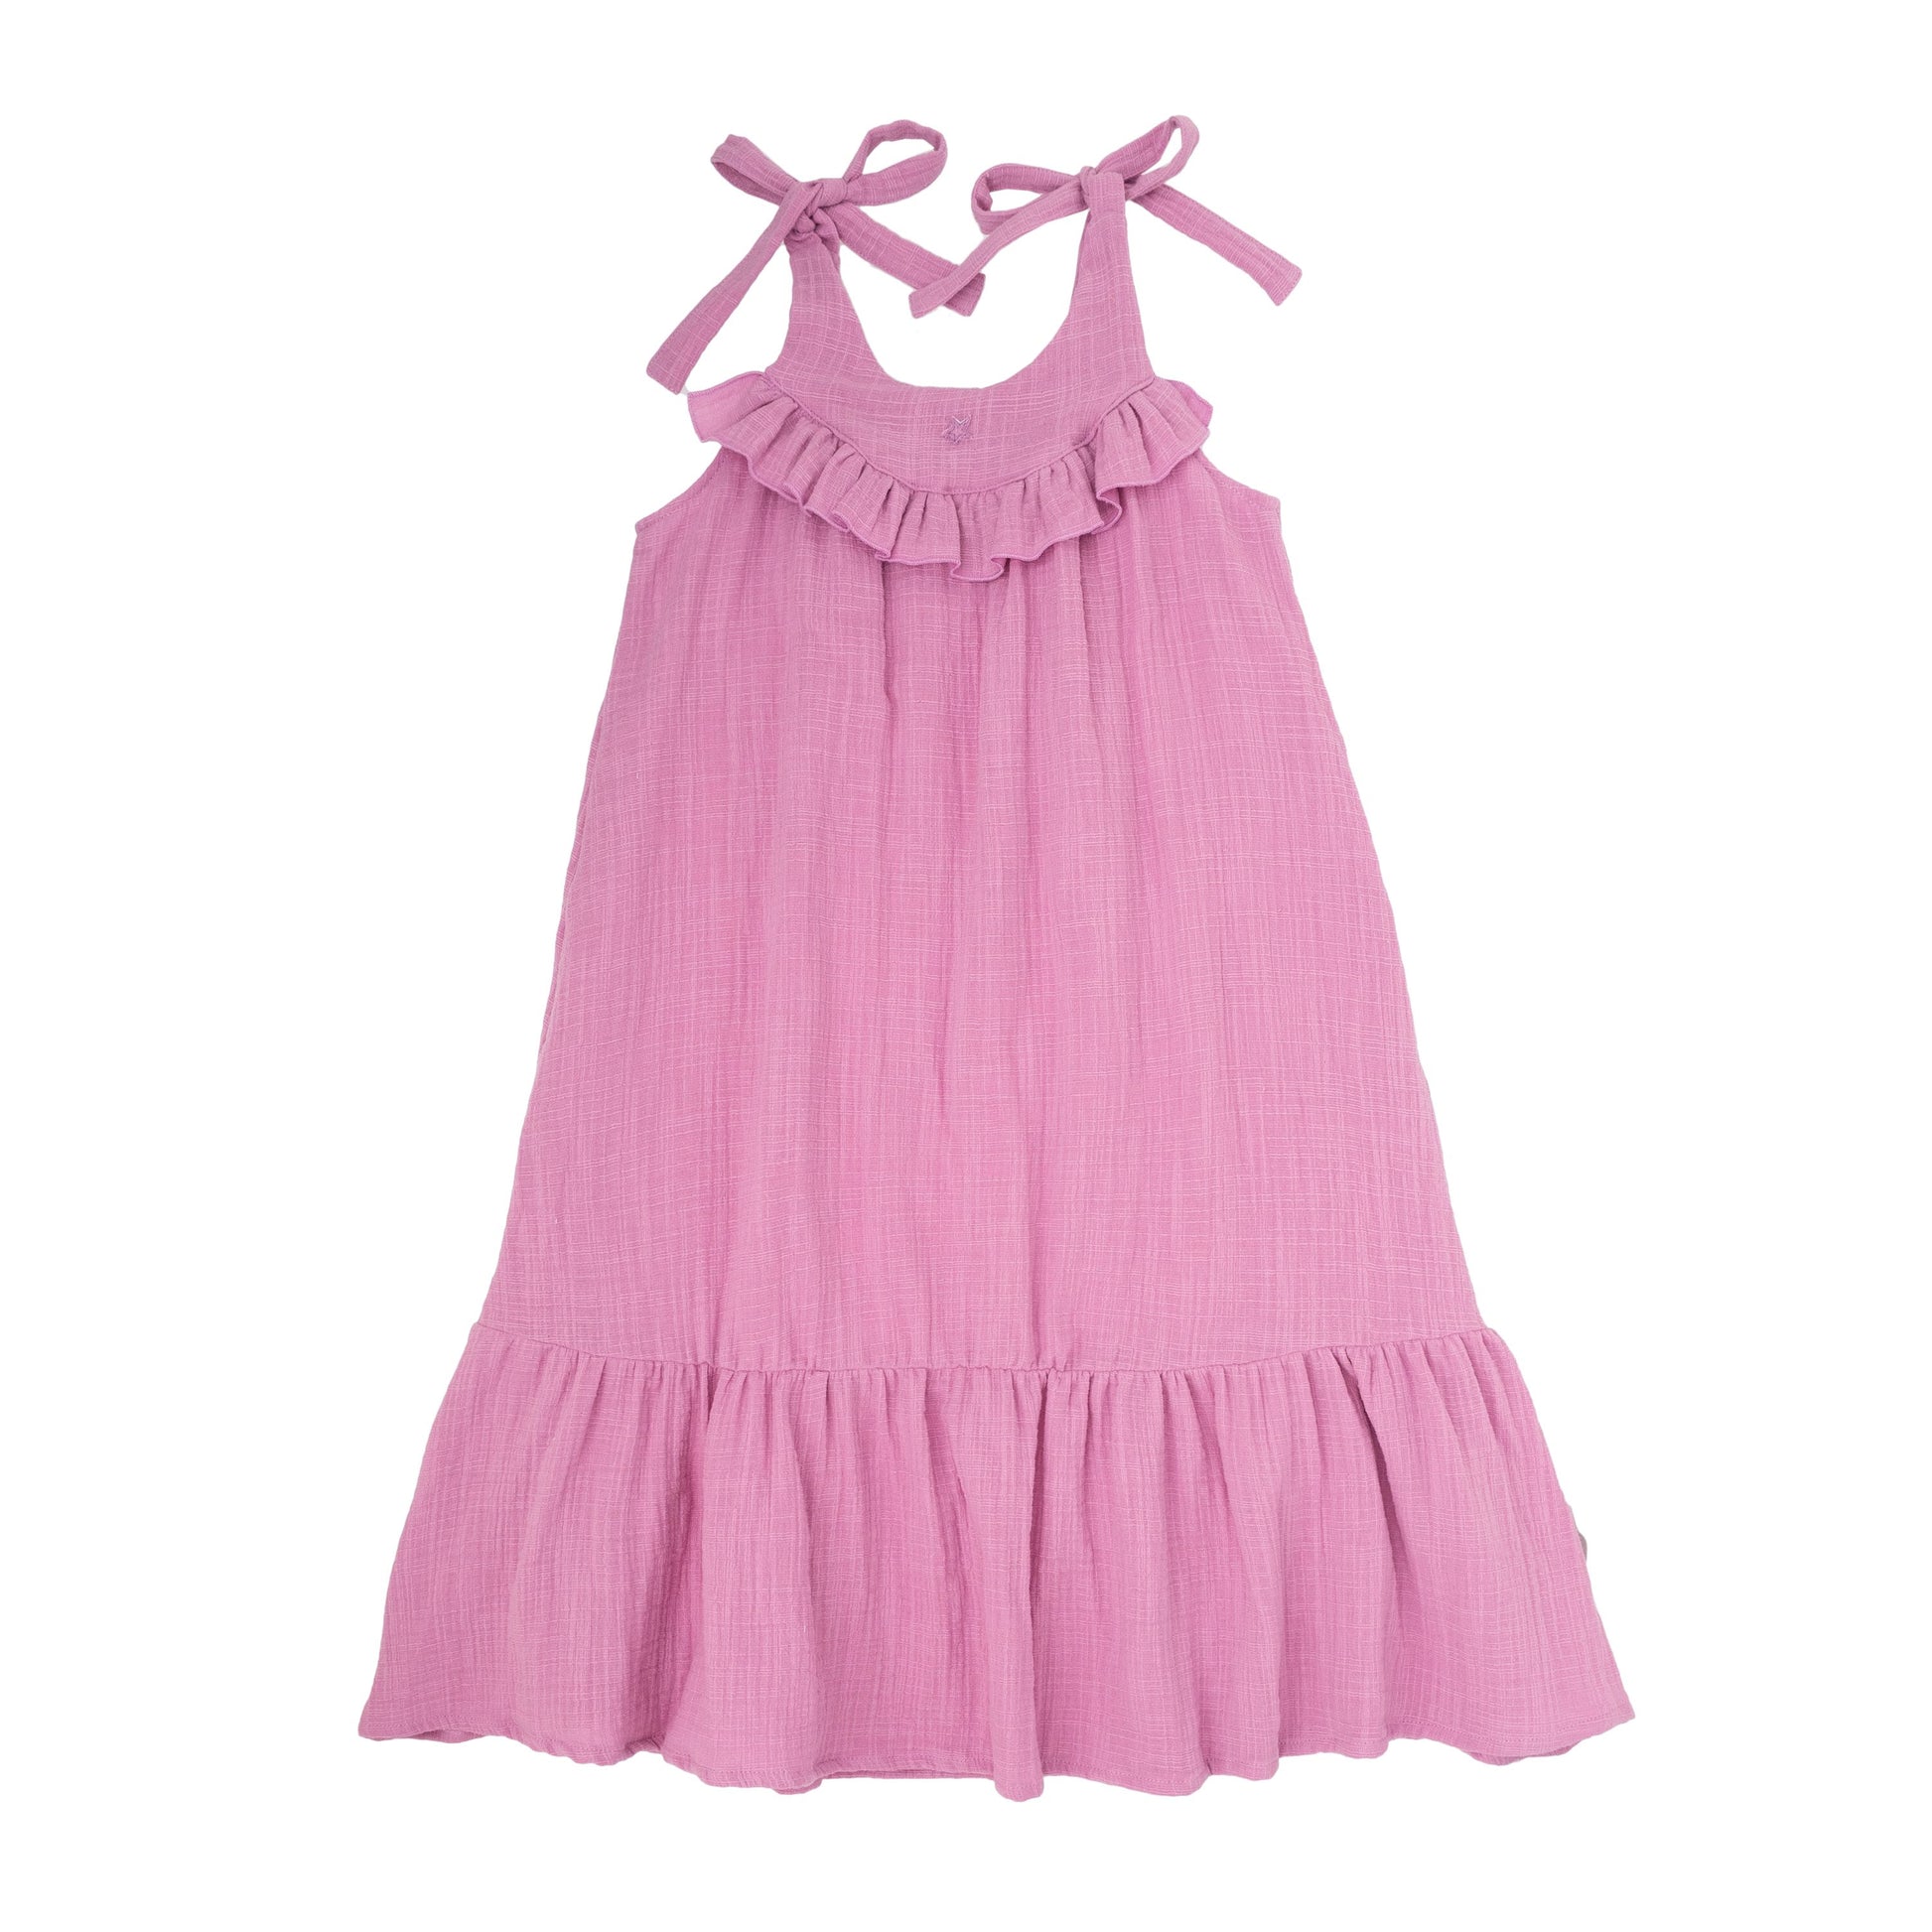 lange jurk roze knooplinten linnen ruches Tocoto vintage 100% organisch katoen fairtrade gemaakt babykleding duurzame kinderkleding sustainable kids clothing